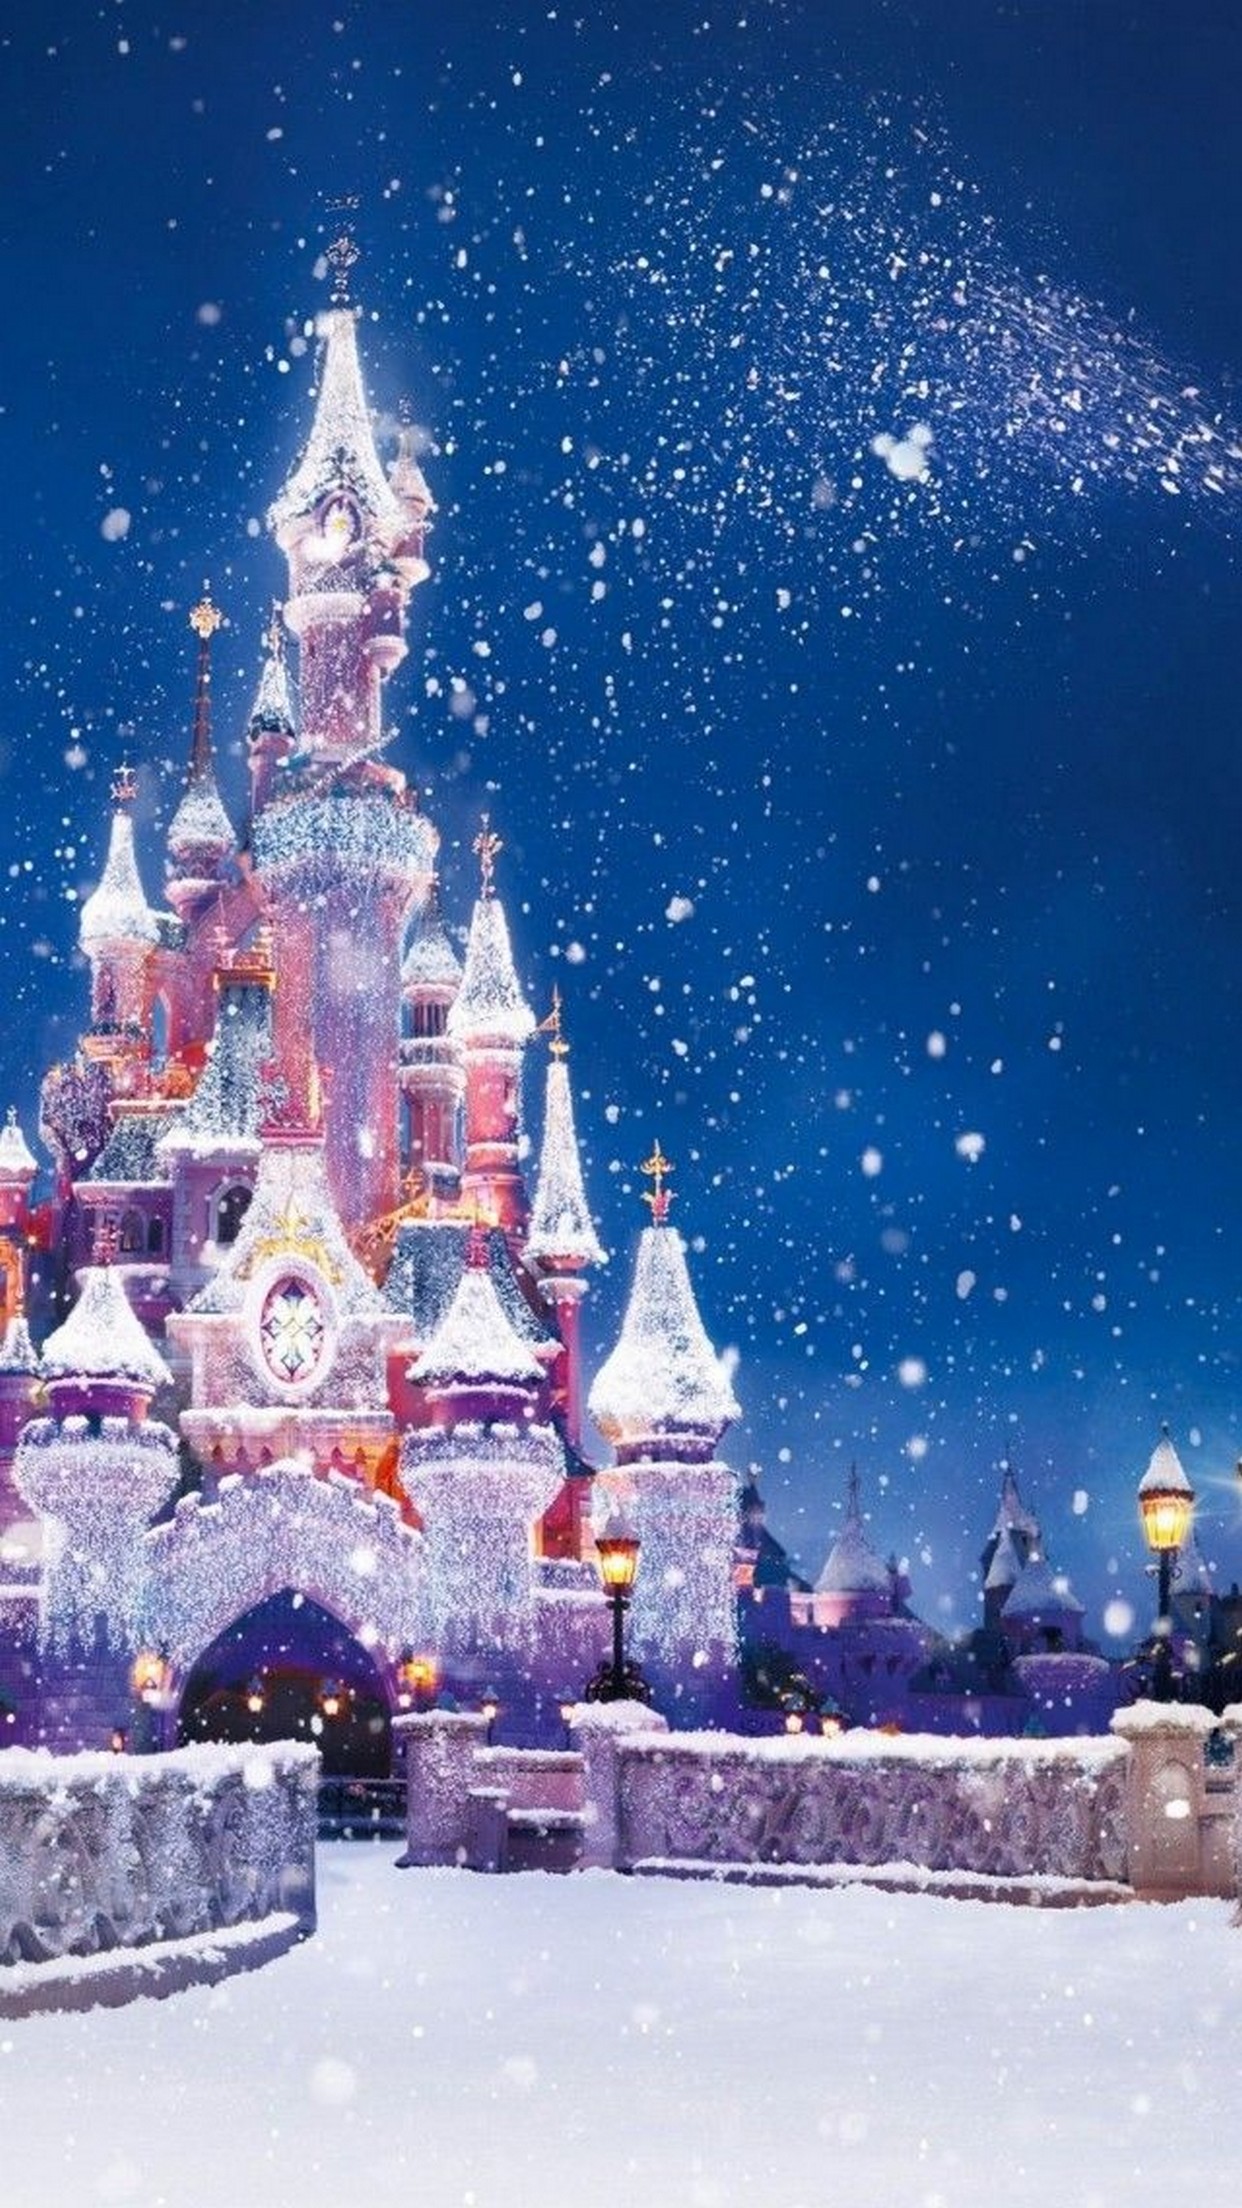 Disney Christmas Wallpaper and Screensavers (57+ images)